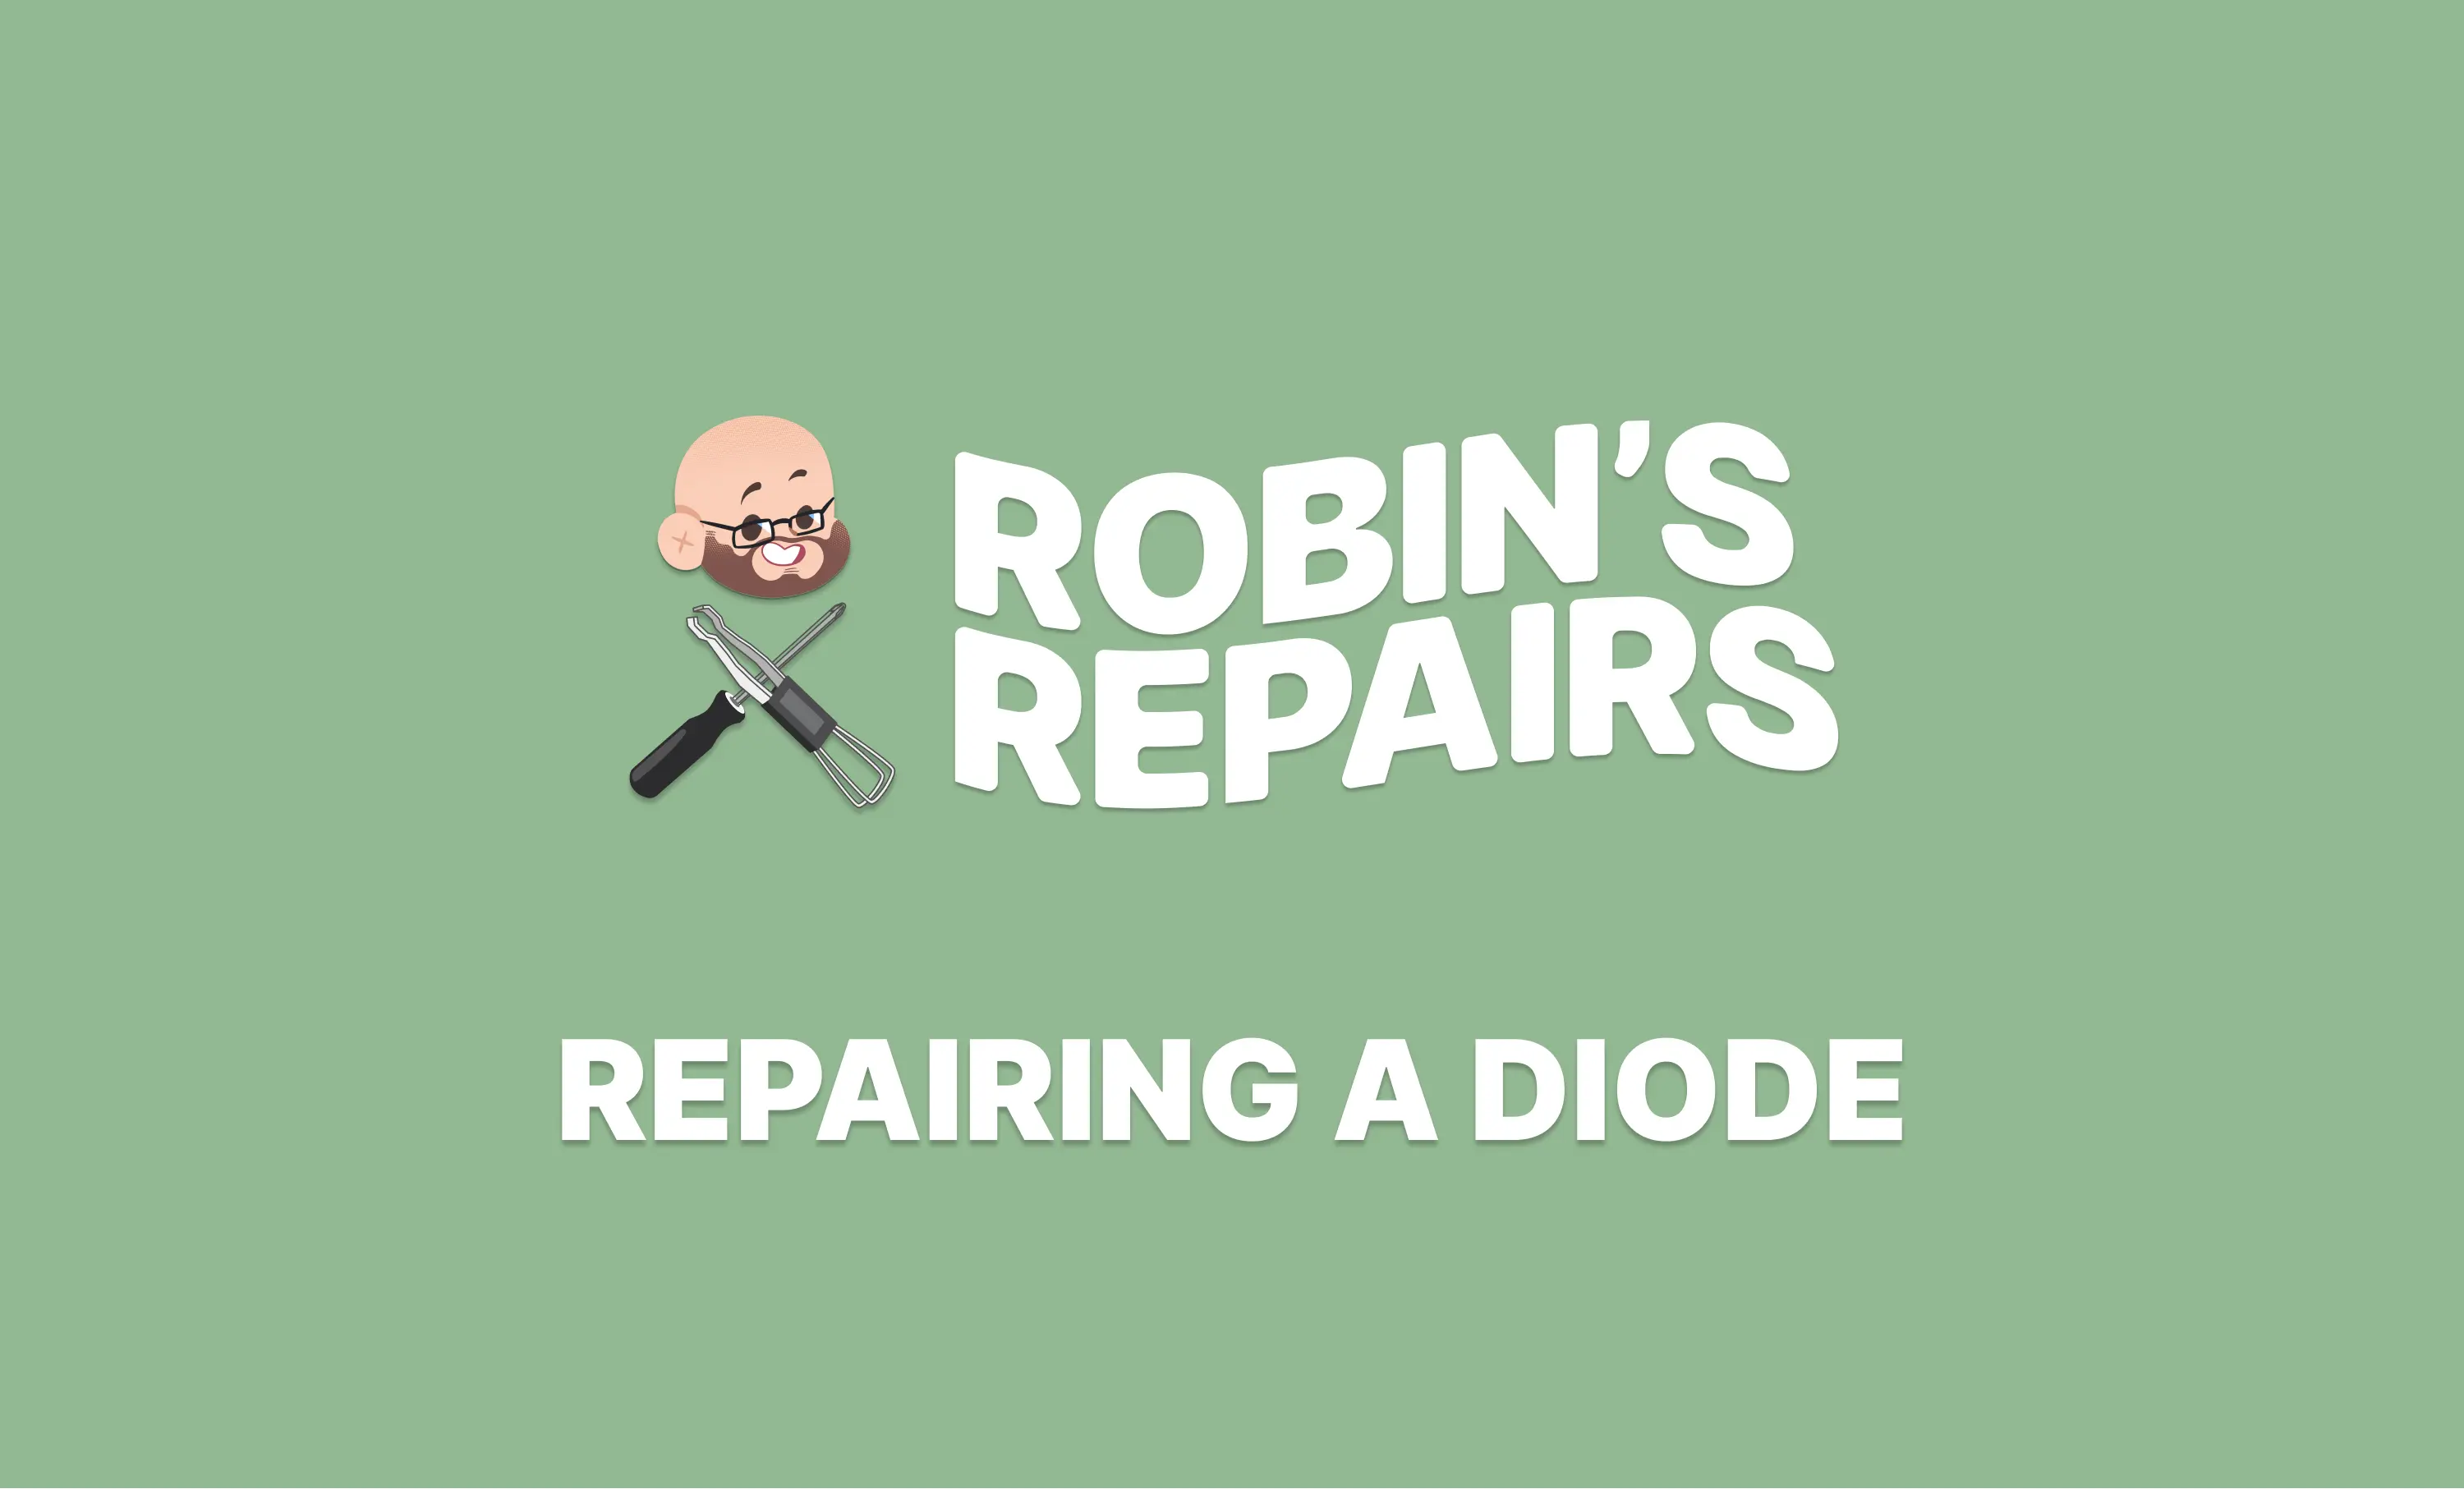 Repairing a diode